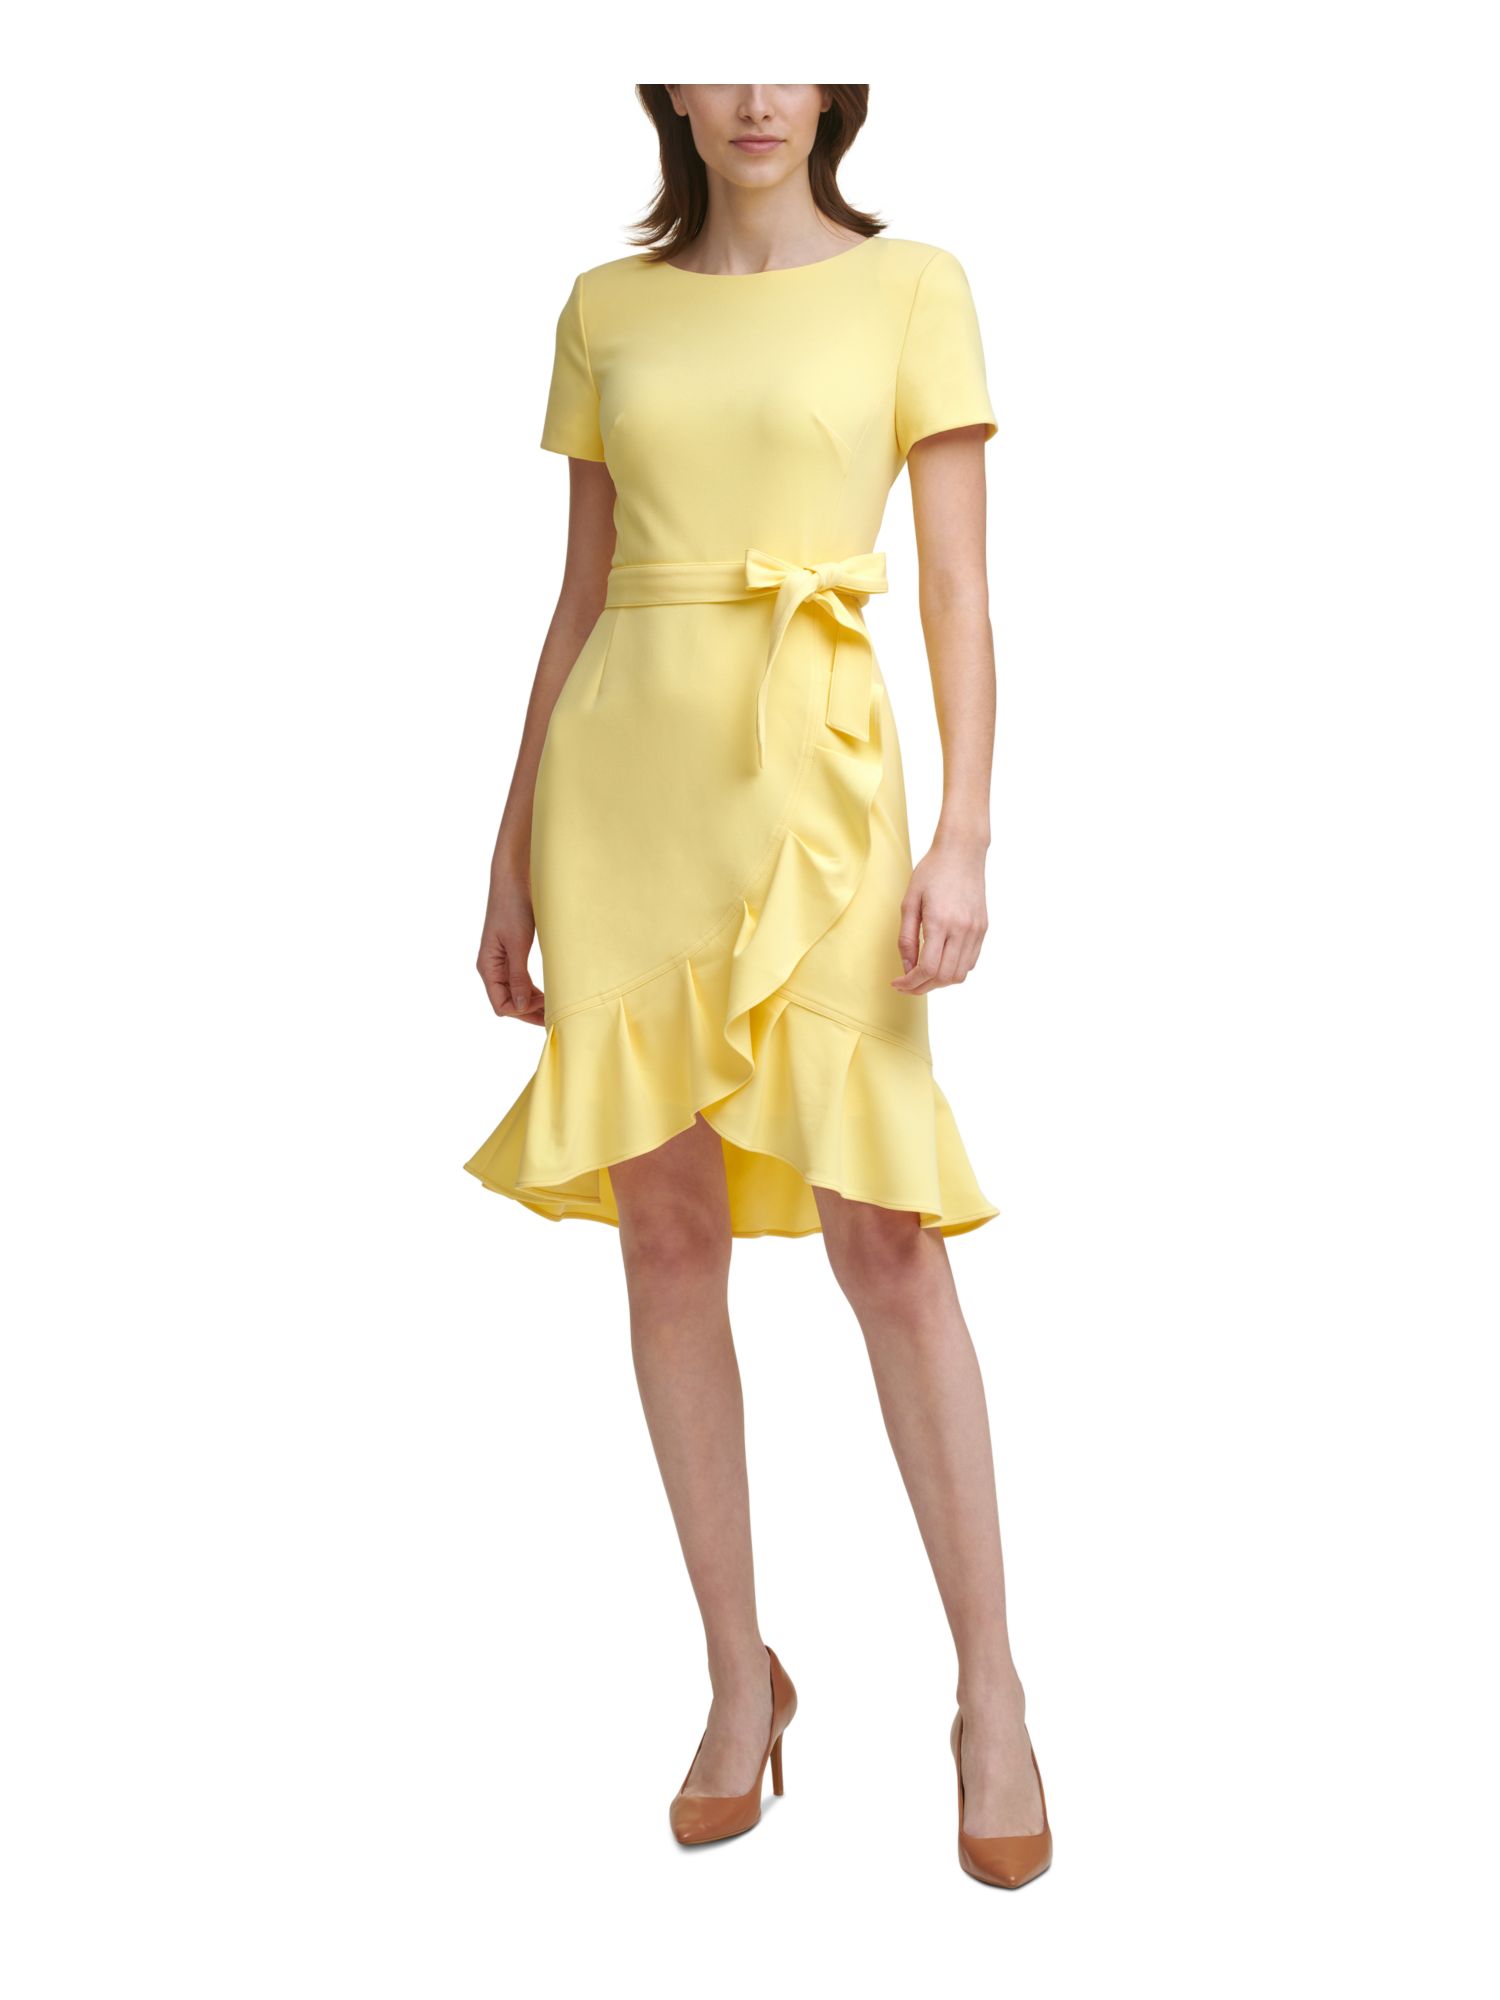 CALVIN KLEIN Womens Yellow Stretch Zippered Ruffled Short Sleeve Round Neck Knee Length Party Sheath Dress Petites 12P